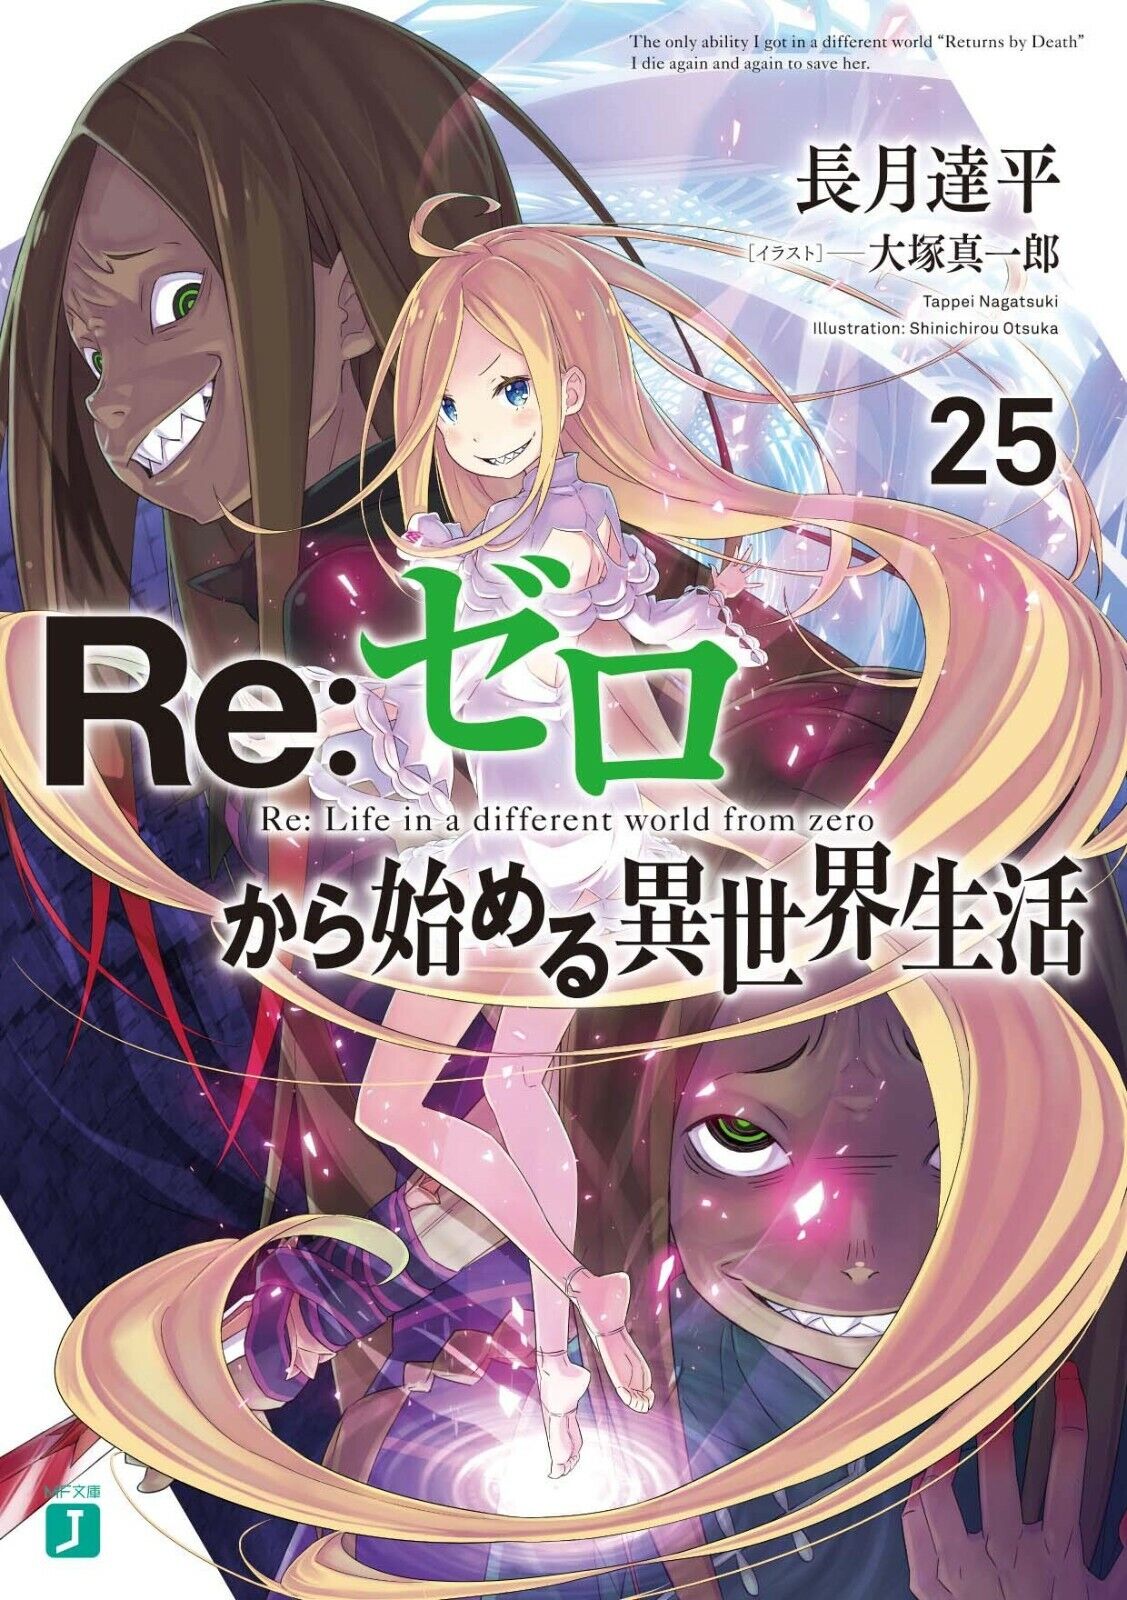 NEW LIGHT NOVEL Re: Zero kara Hajimeru Isekai Seikat Series vol.1 - 30  Japanese